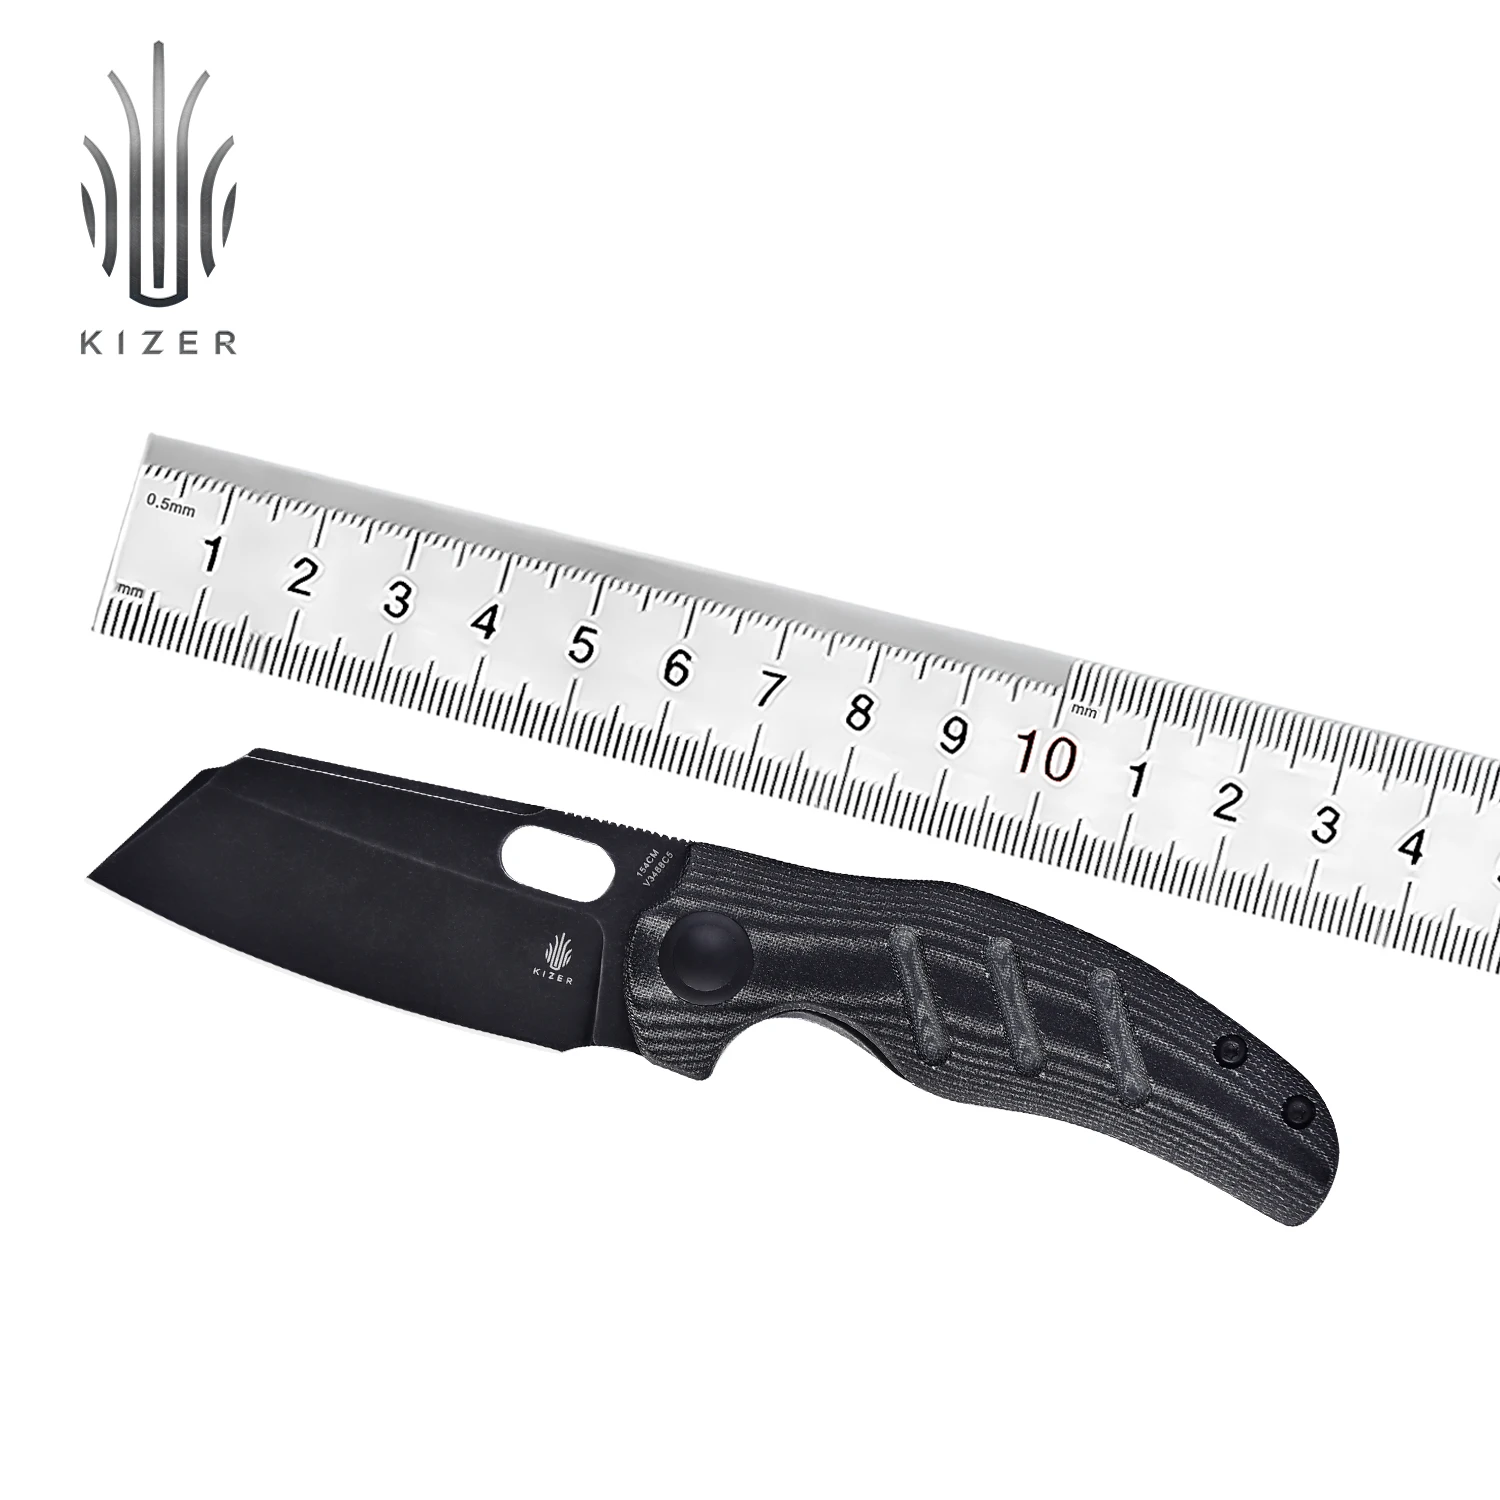 kizer-ミニ折りたたみ式ブレードナイフ、ブレードとミカラータリーハンドル、サムホールオープニング、edcナイフ、黒、v3488c5、c01c、新品、154cm、2021